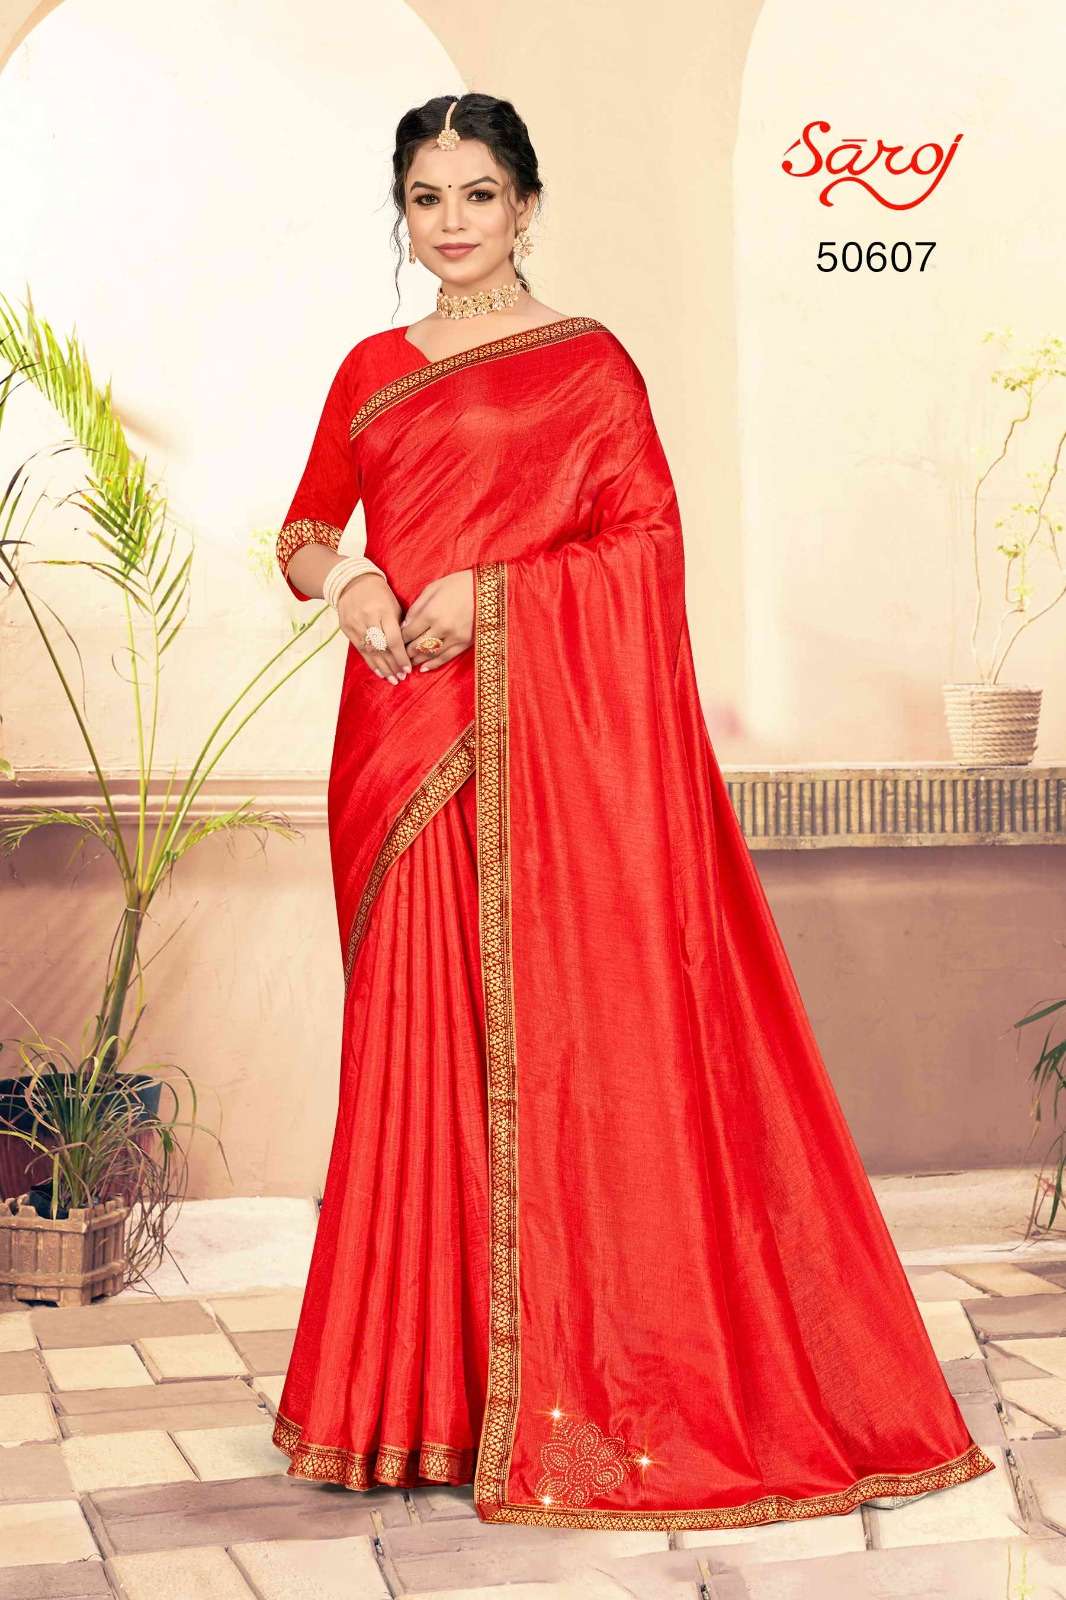 Saroj textile presents Fruit combo-3 Designer casual sarees catalogue